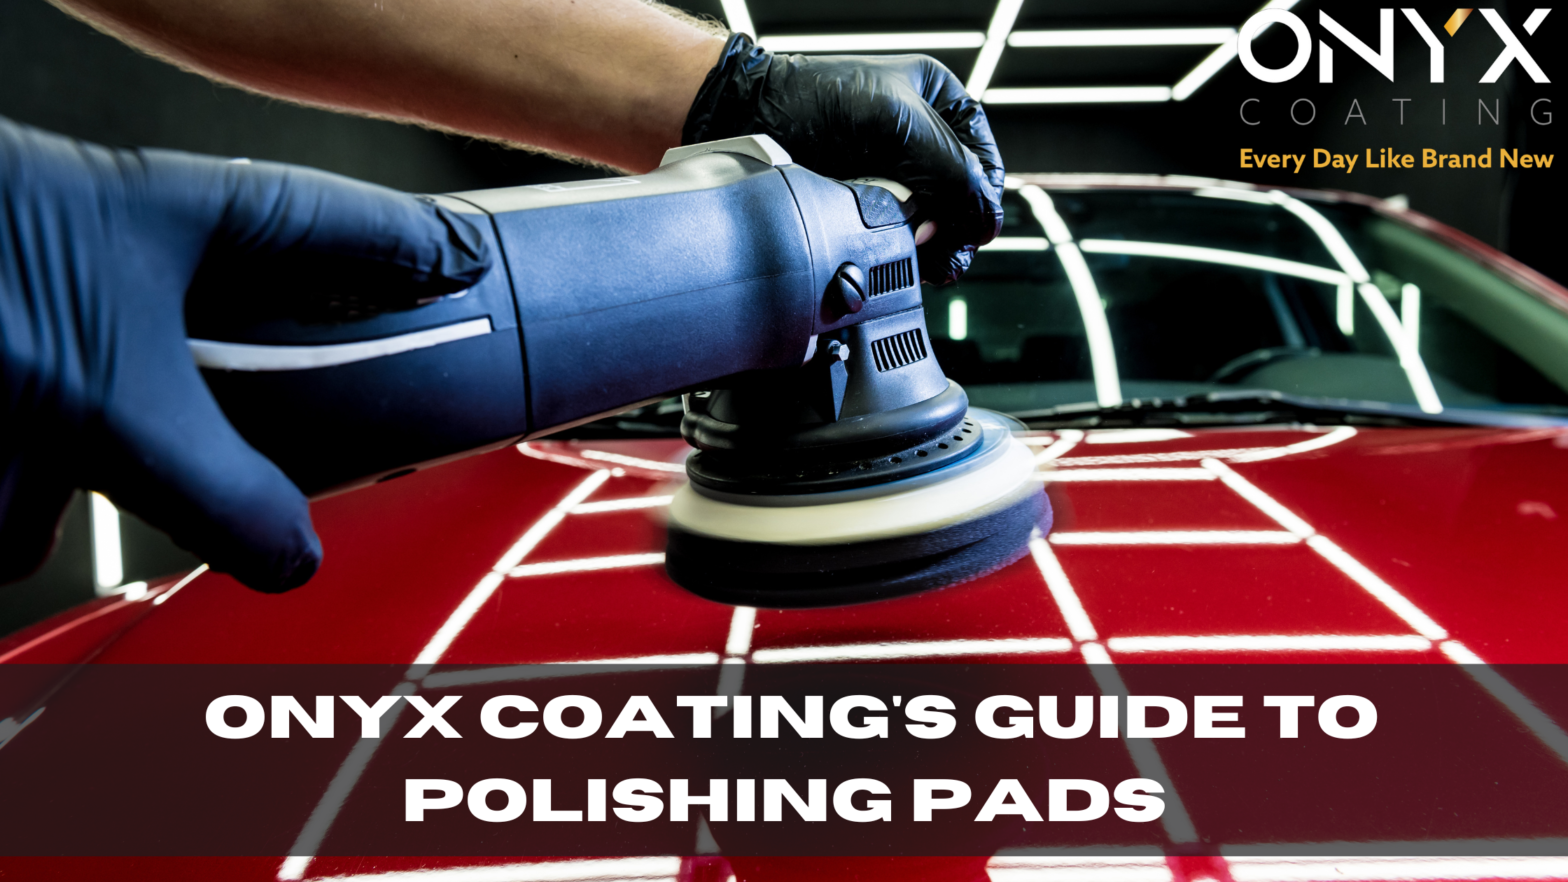 Onyx Coating's guide to polishing pads